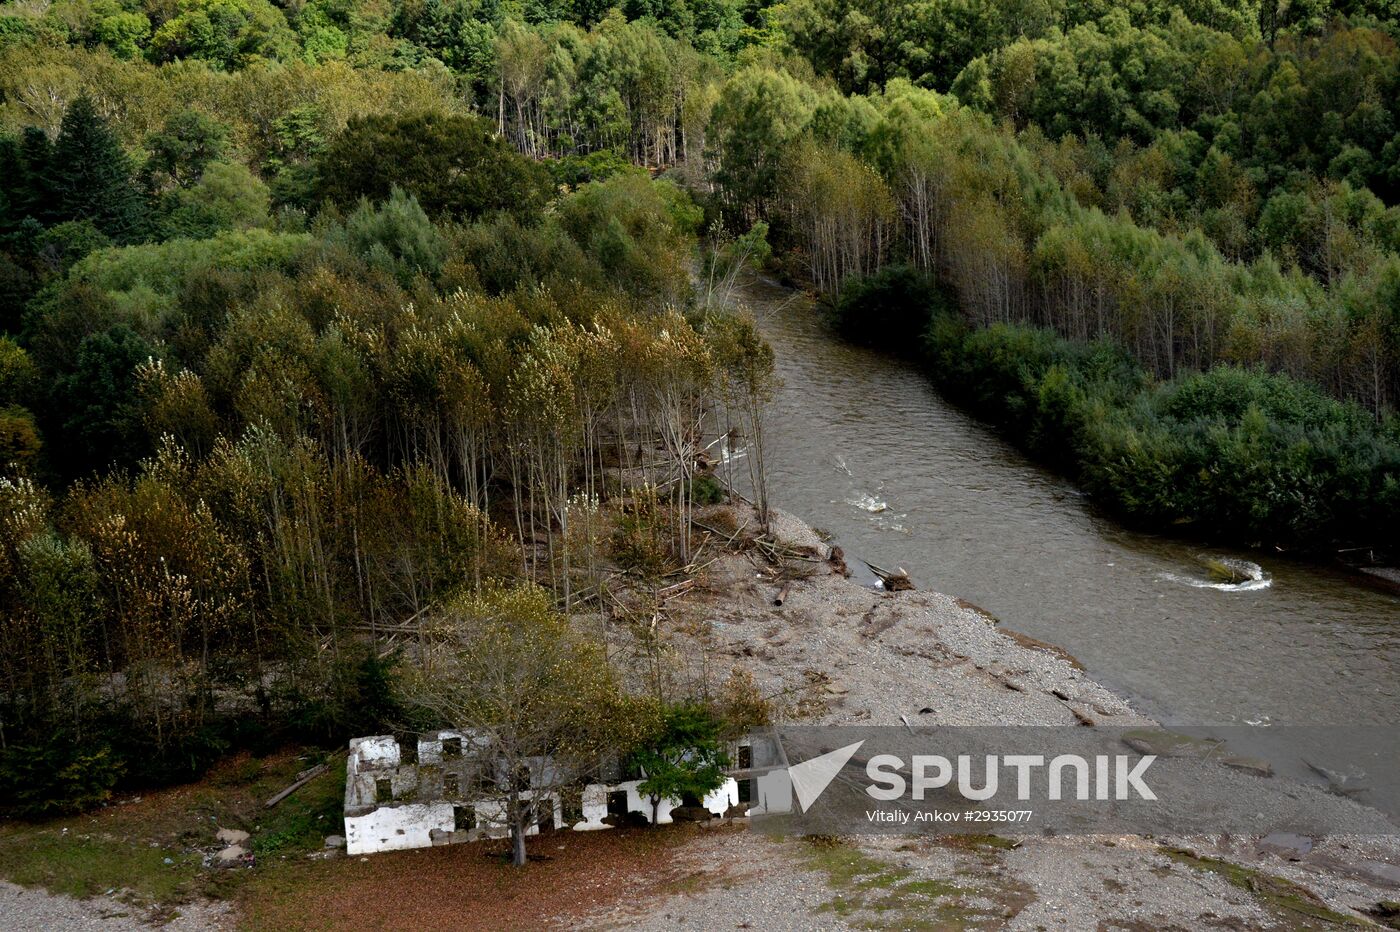 Lionrock typhoon aftermath in Primorye Territory